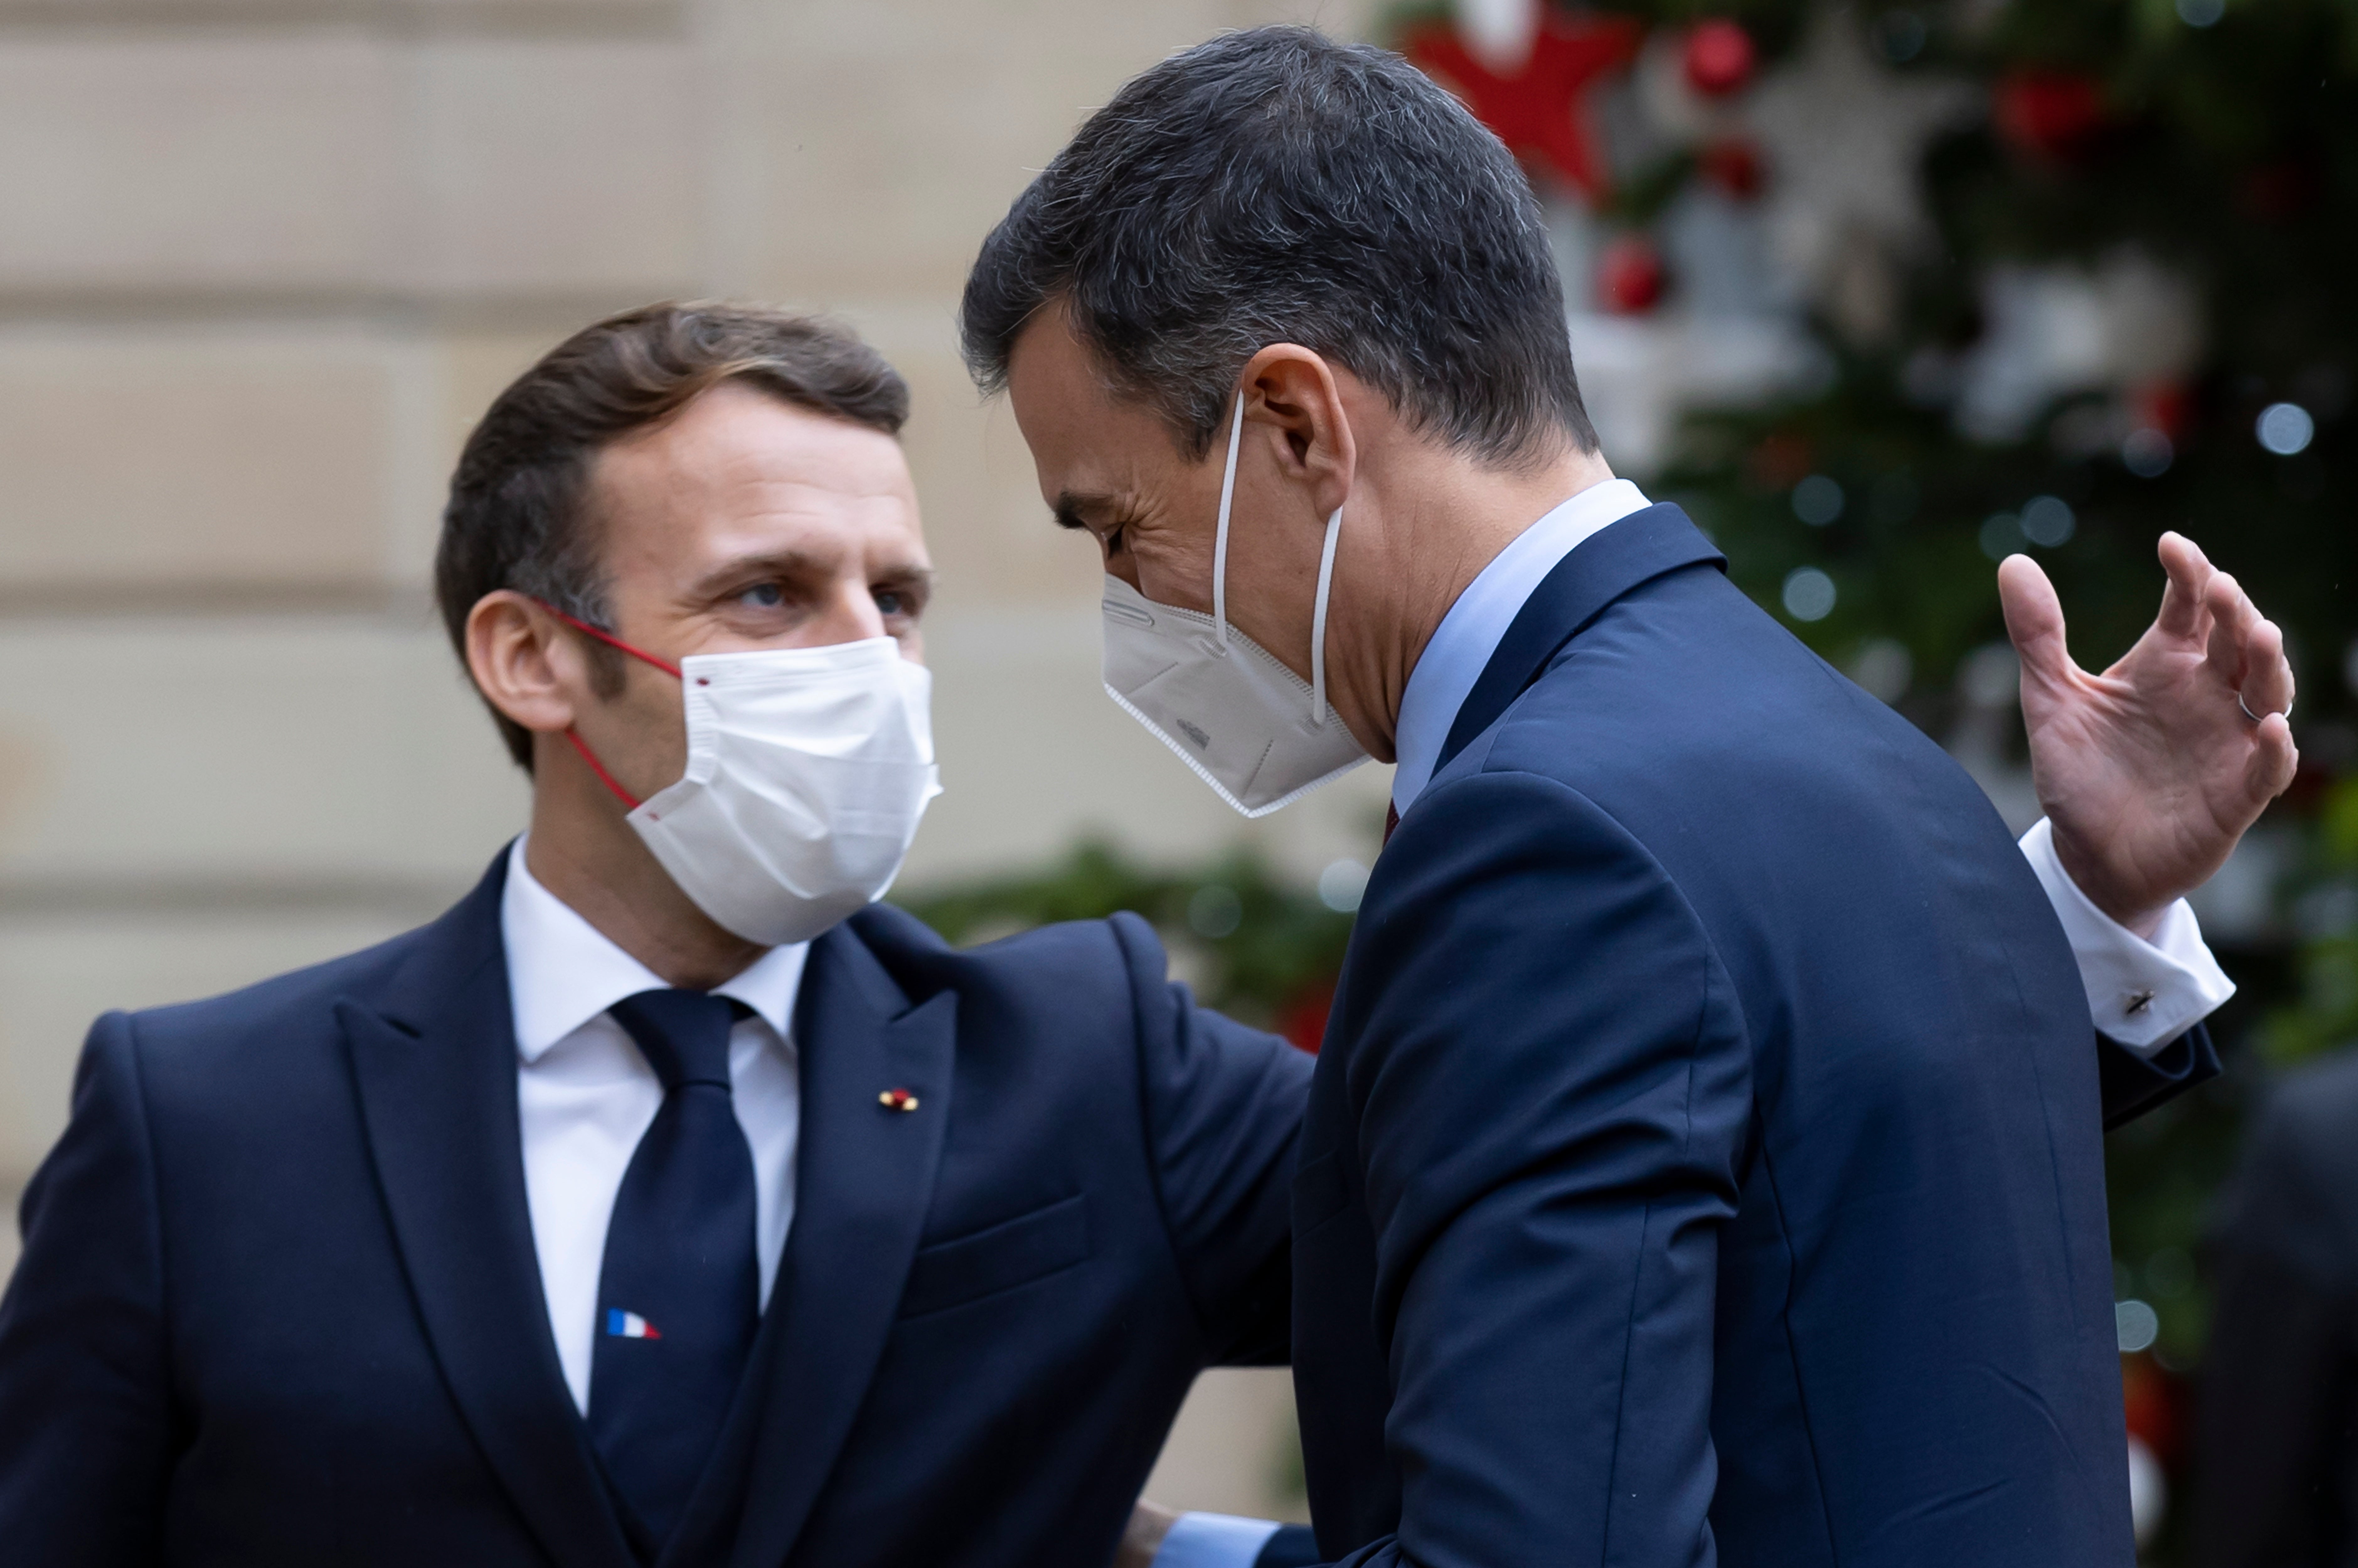 Mr Sanchez and Mr Macron met Monday